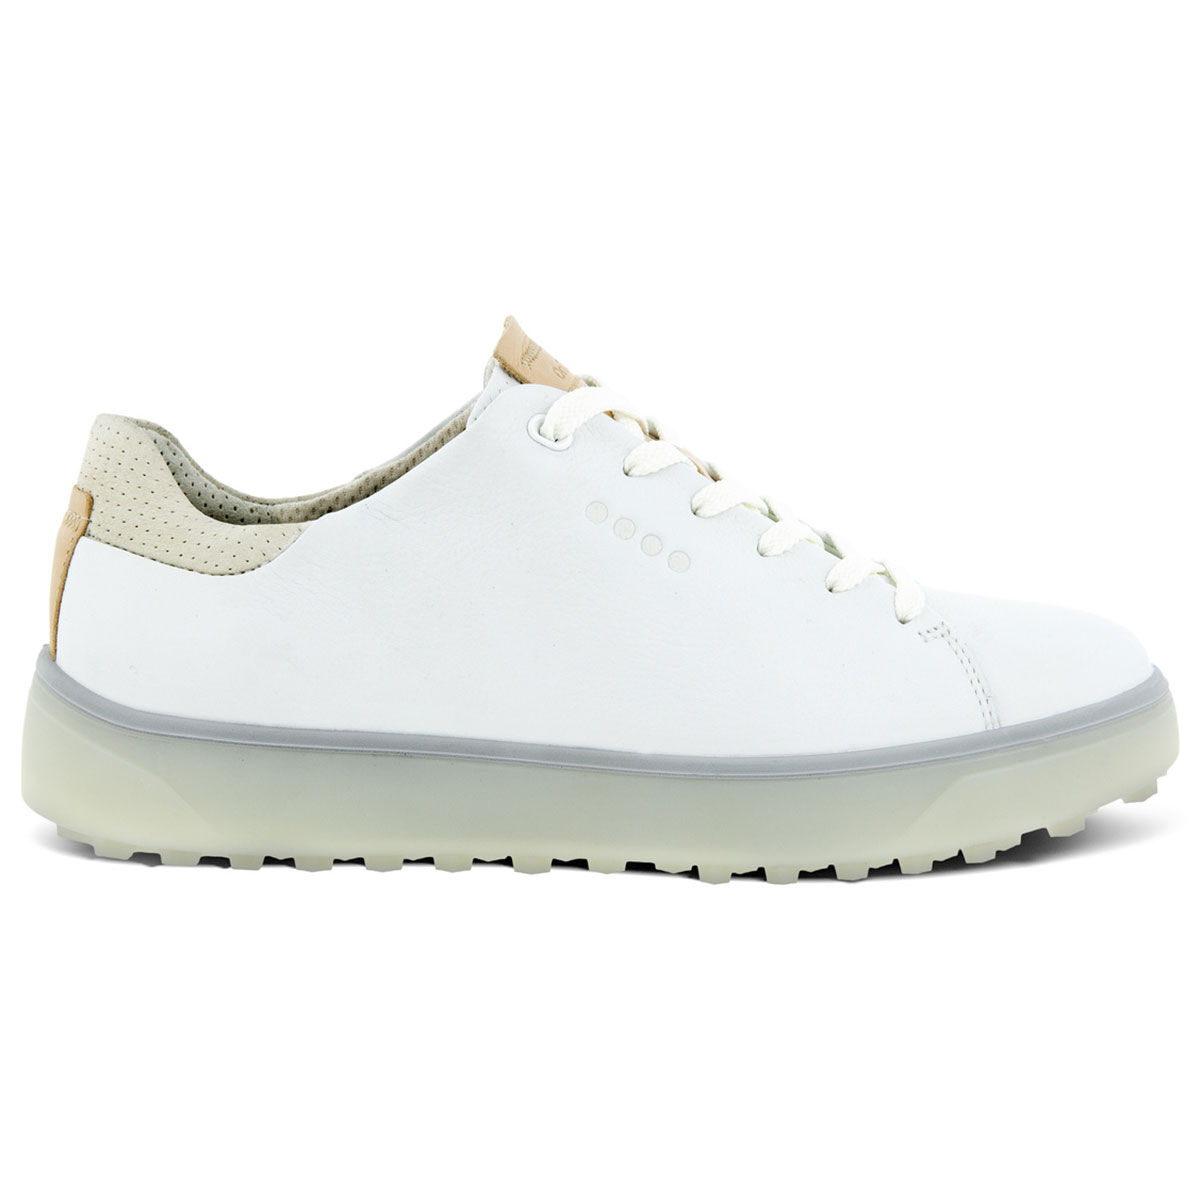 Chaussures ECCO Golf Tray pour femmes, femme, 4-4.5, Blanc/Gris, Normal | Online Golf